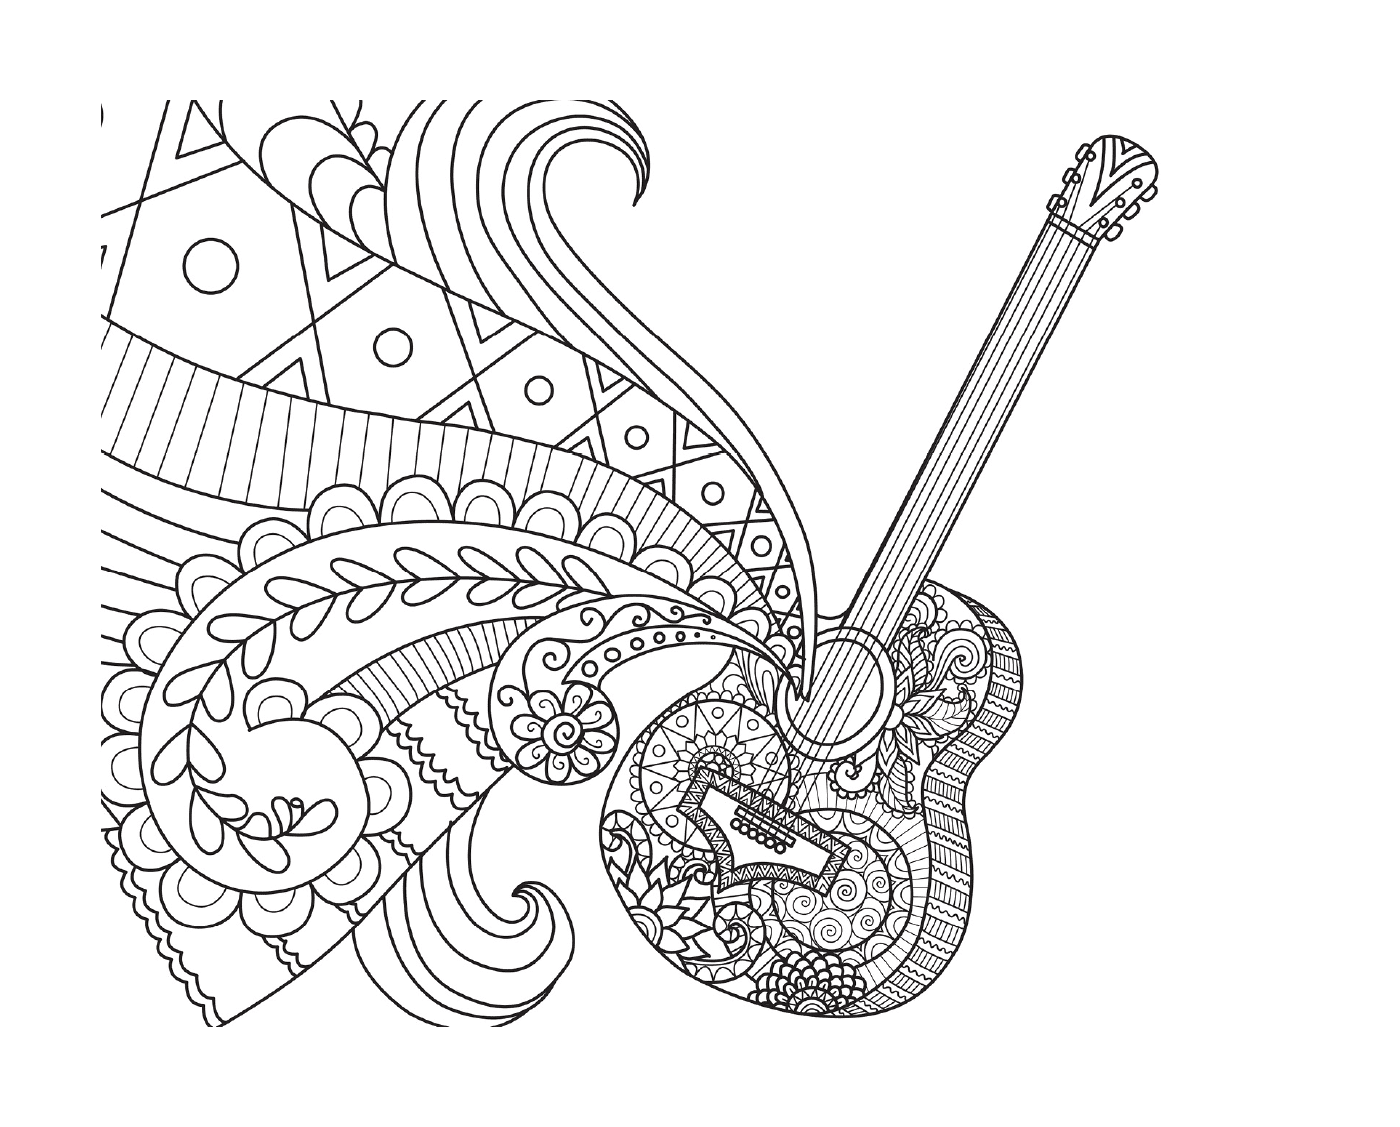  Guitarra Coco de Bimbimkha 